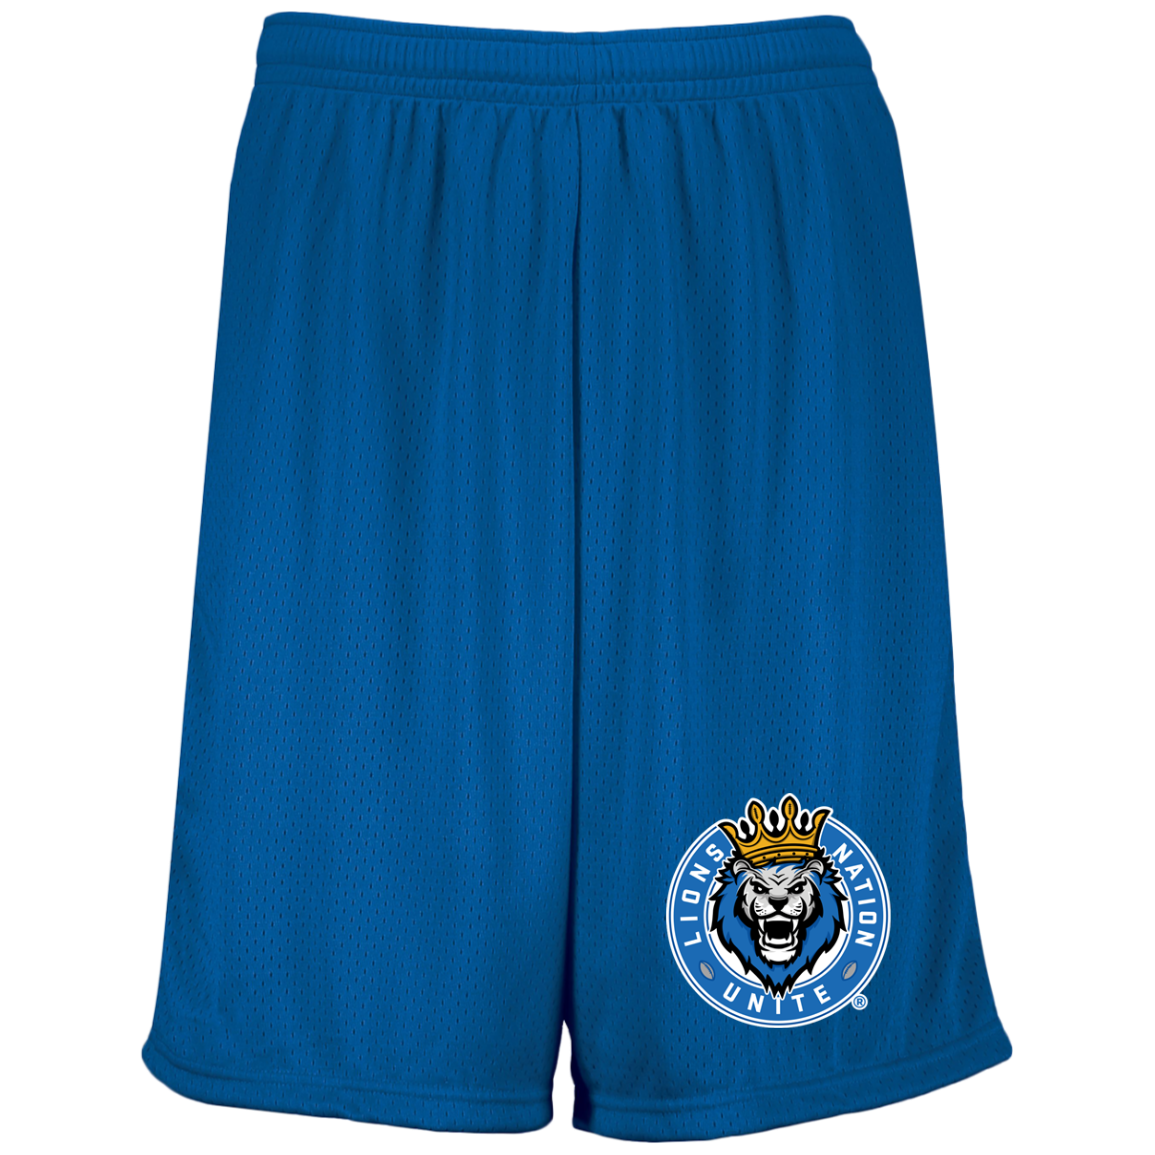 Lions Nation Unite - 1844 Moisture-Wicking 9 inch Inseam Mesh Shorts